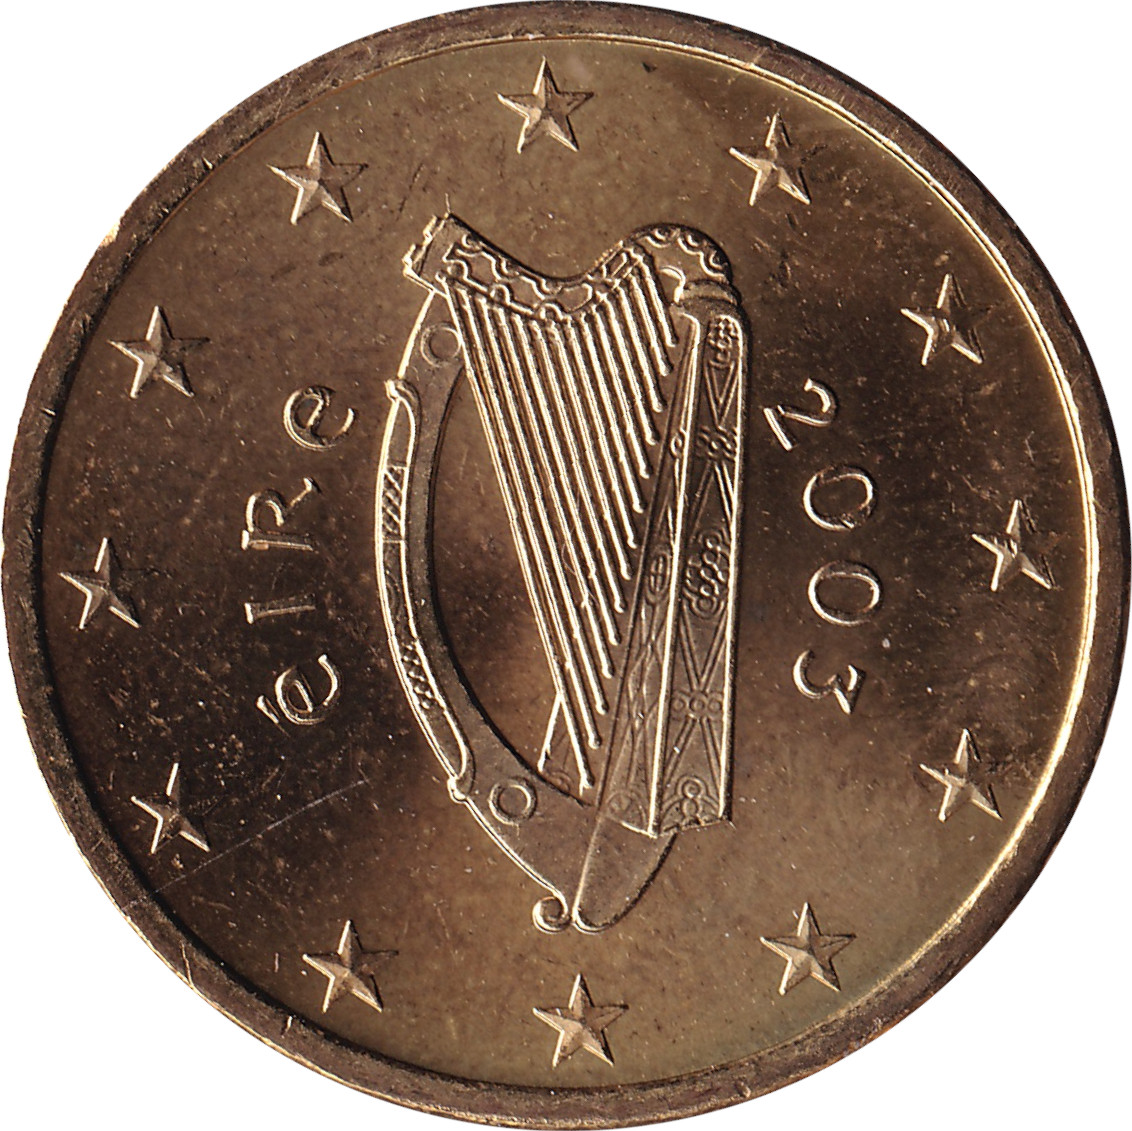 50 eurocents - Lire irlandaise